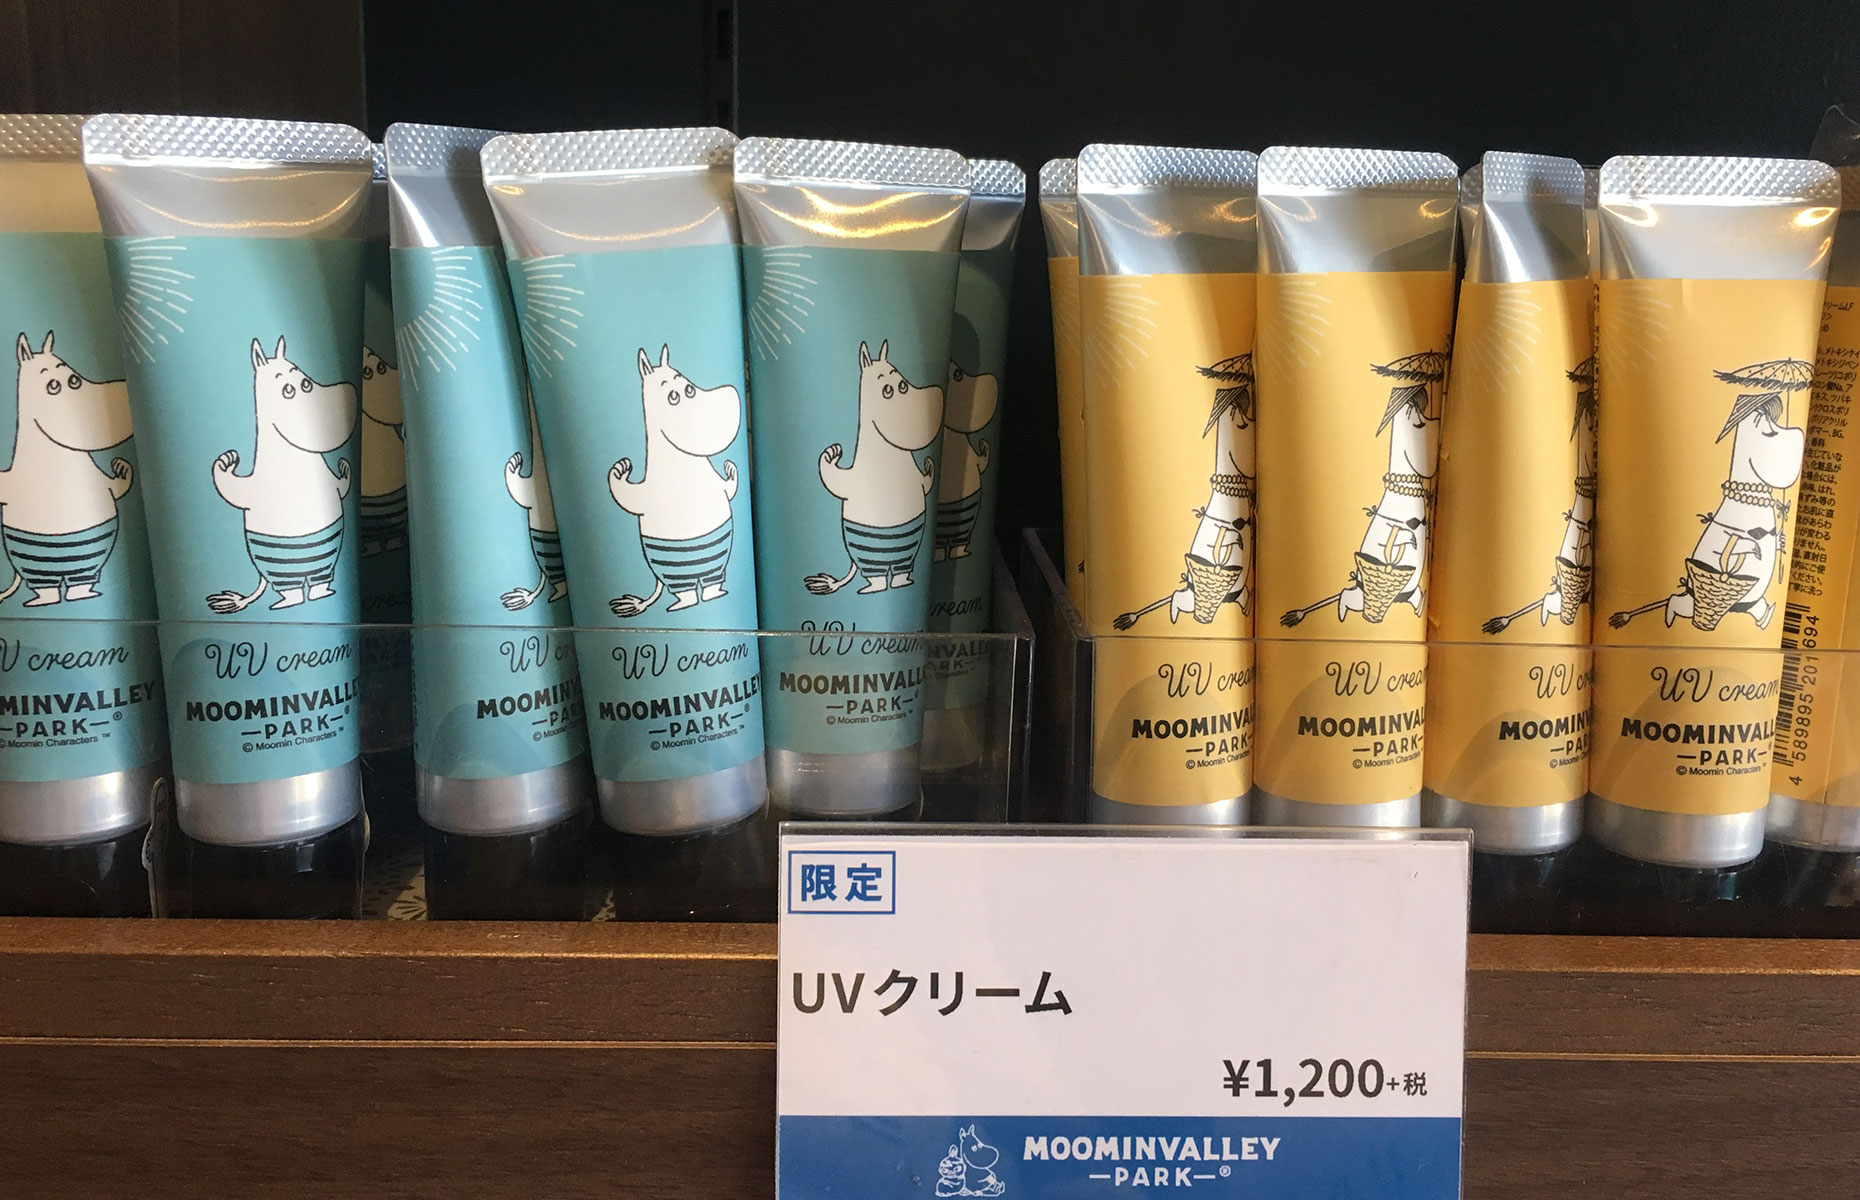 Moomin UV cream at the Moominvalley Park, Tokyo